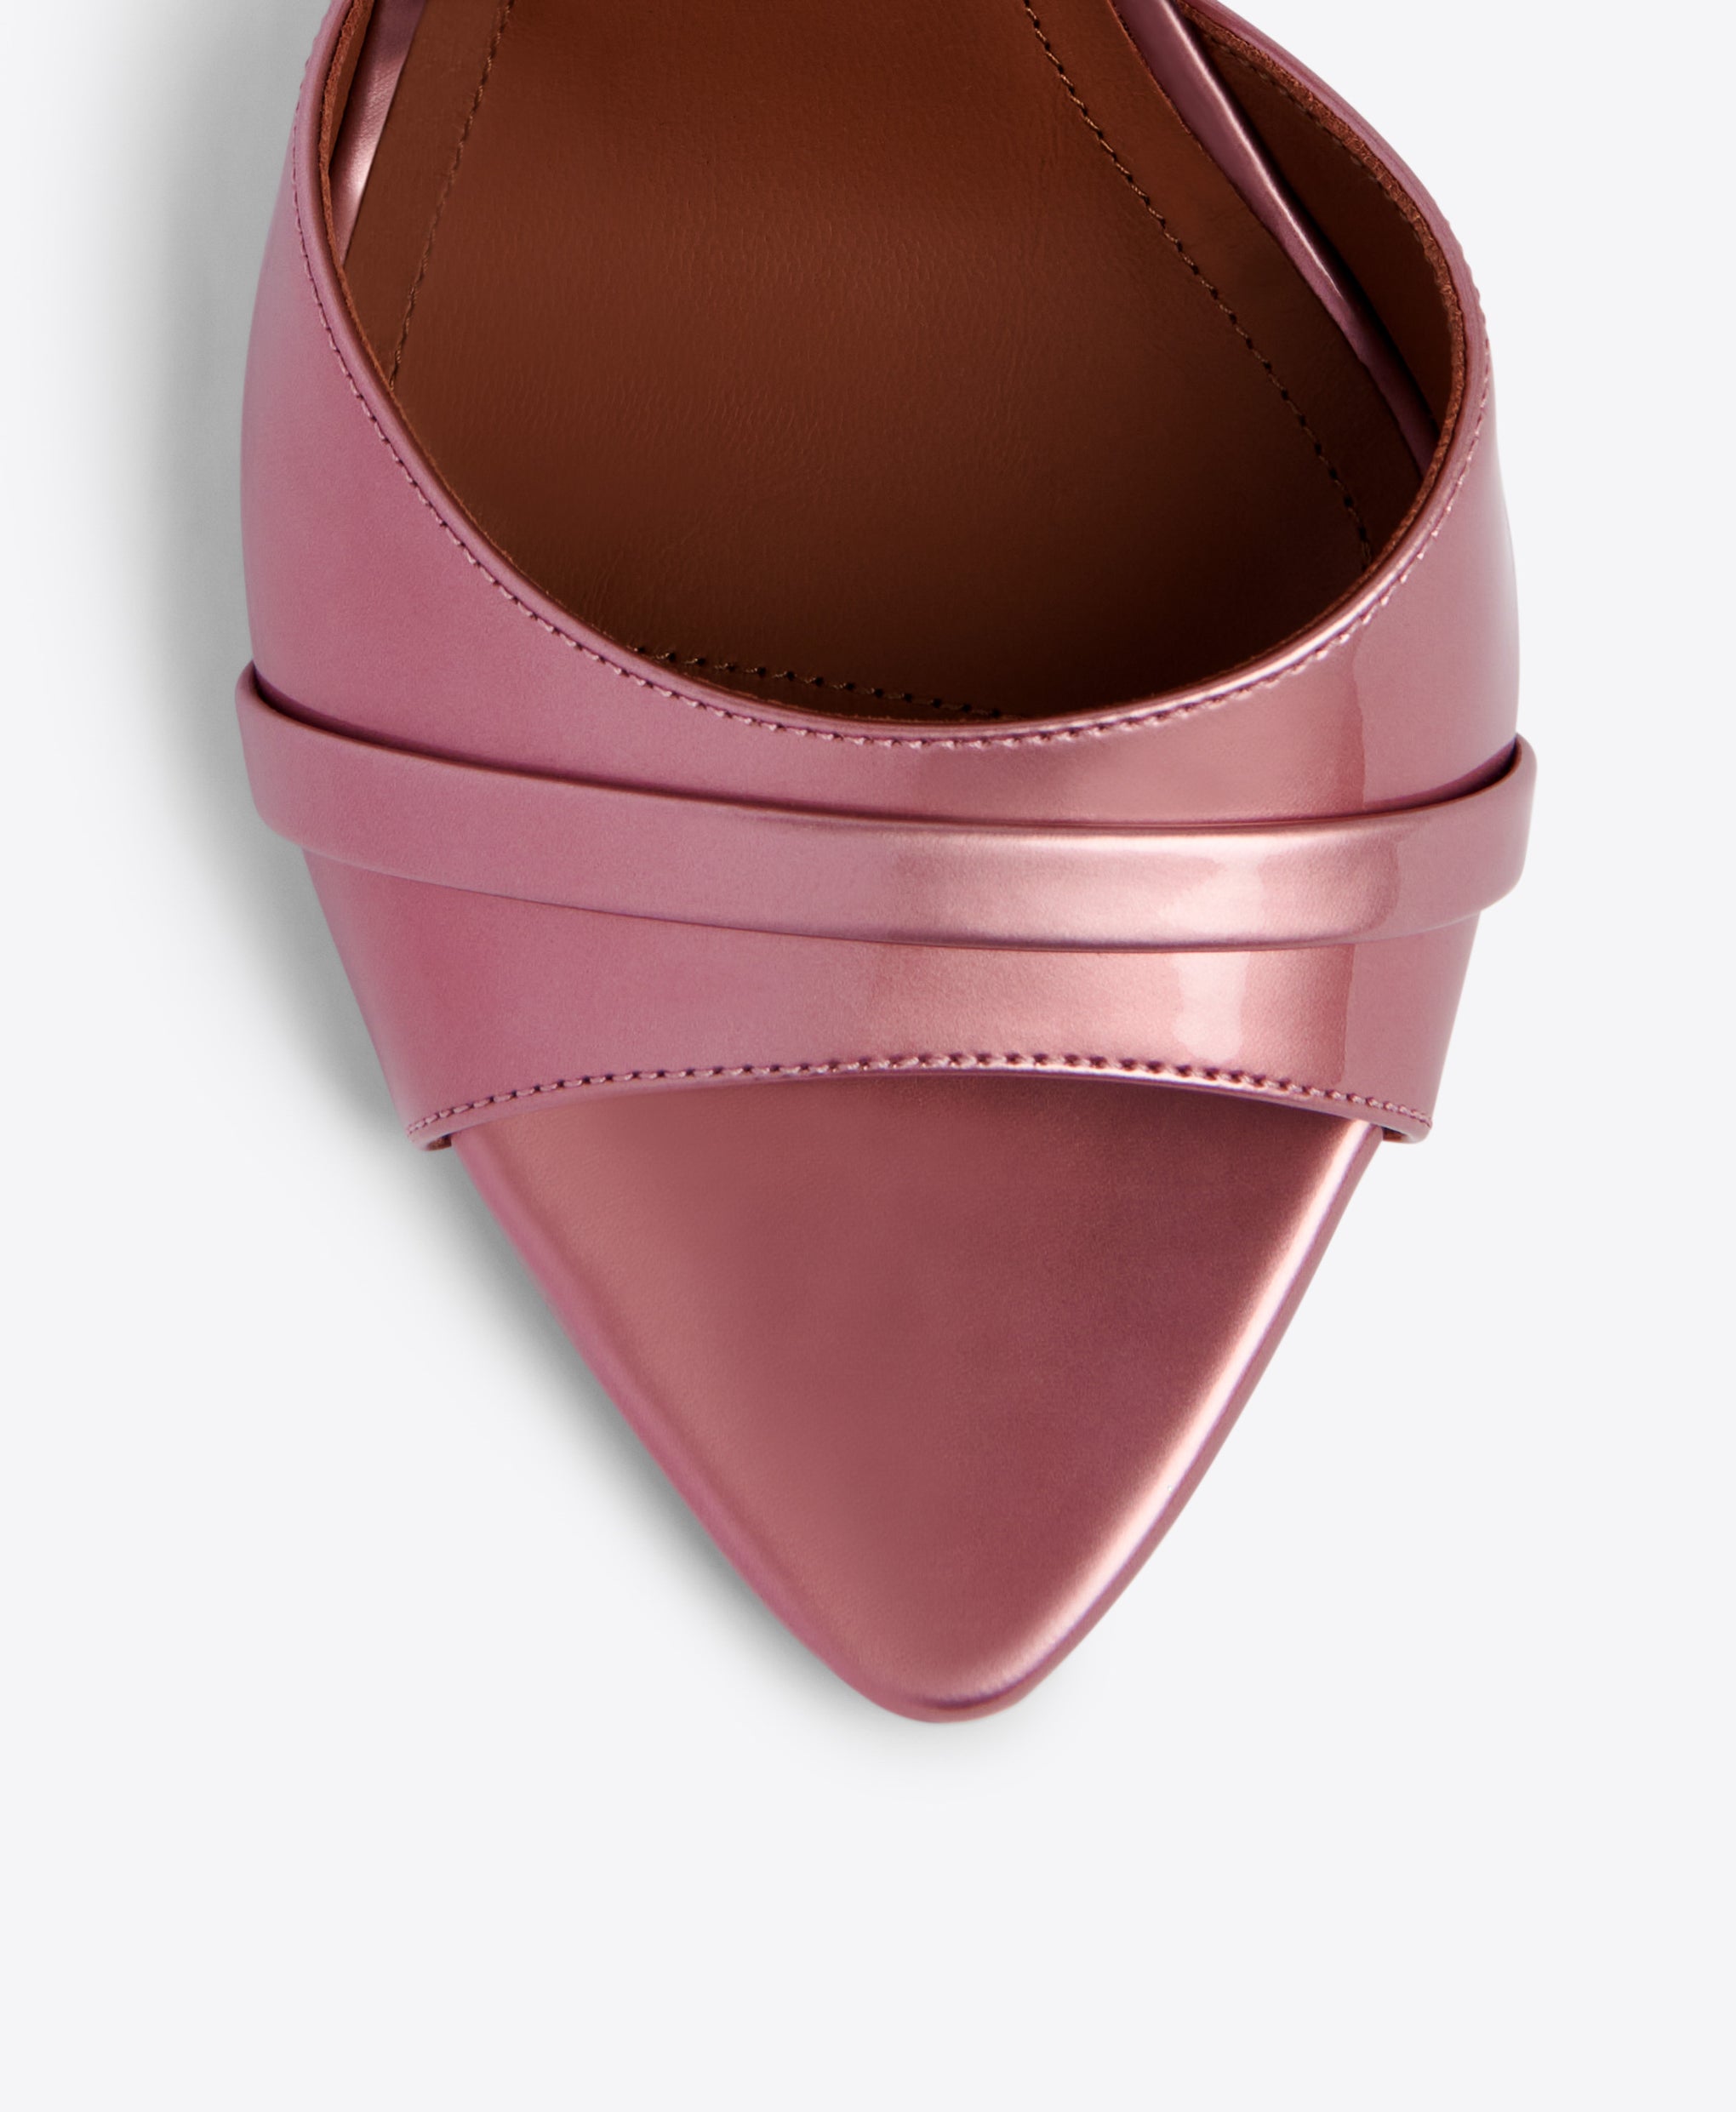 Malone Souliers Una 90mm Pink Metallic Patent Heeled Sandals